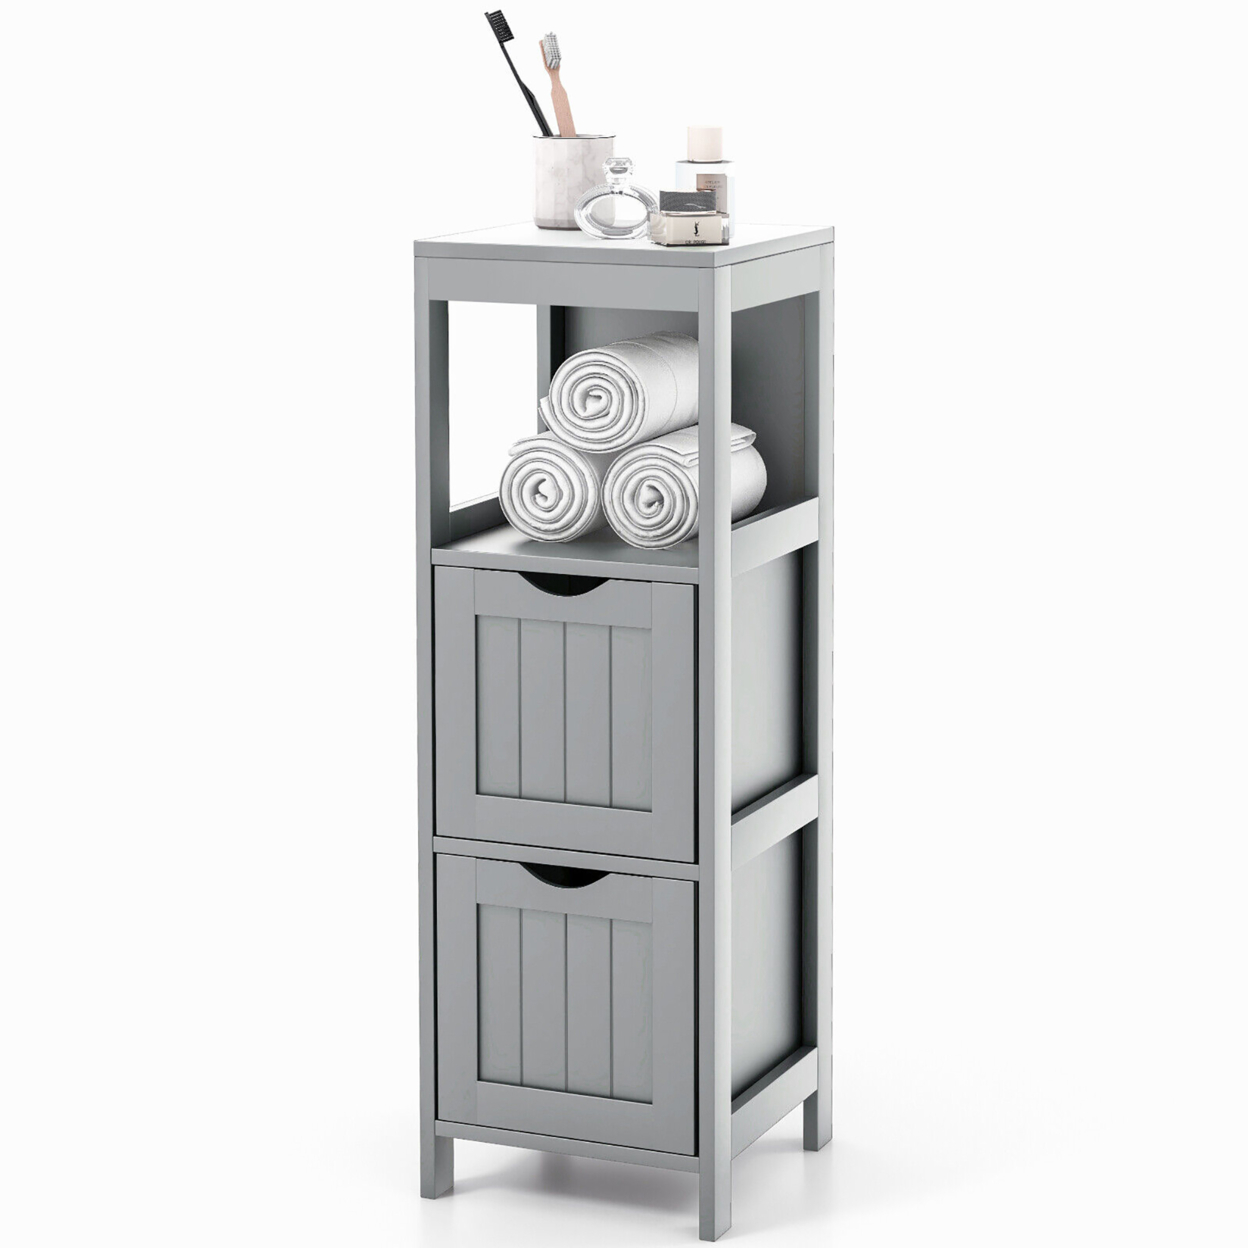 Bathroom Floor Cabinet Side Wooden Storage Organizer W/ Removable Drawers - Grey